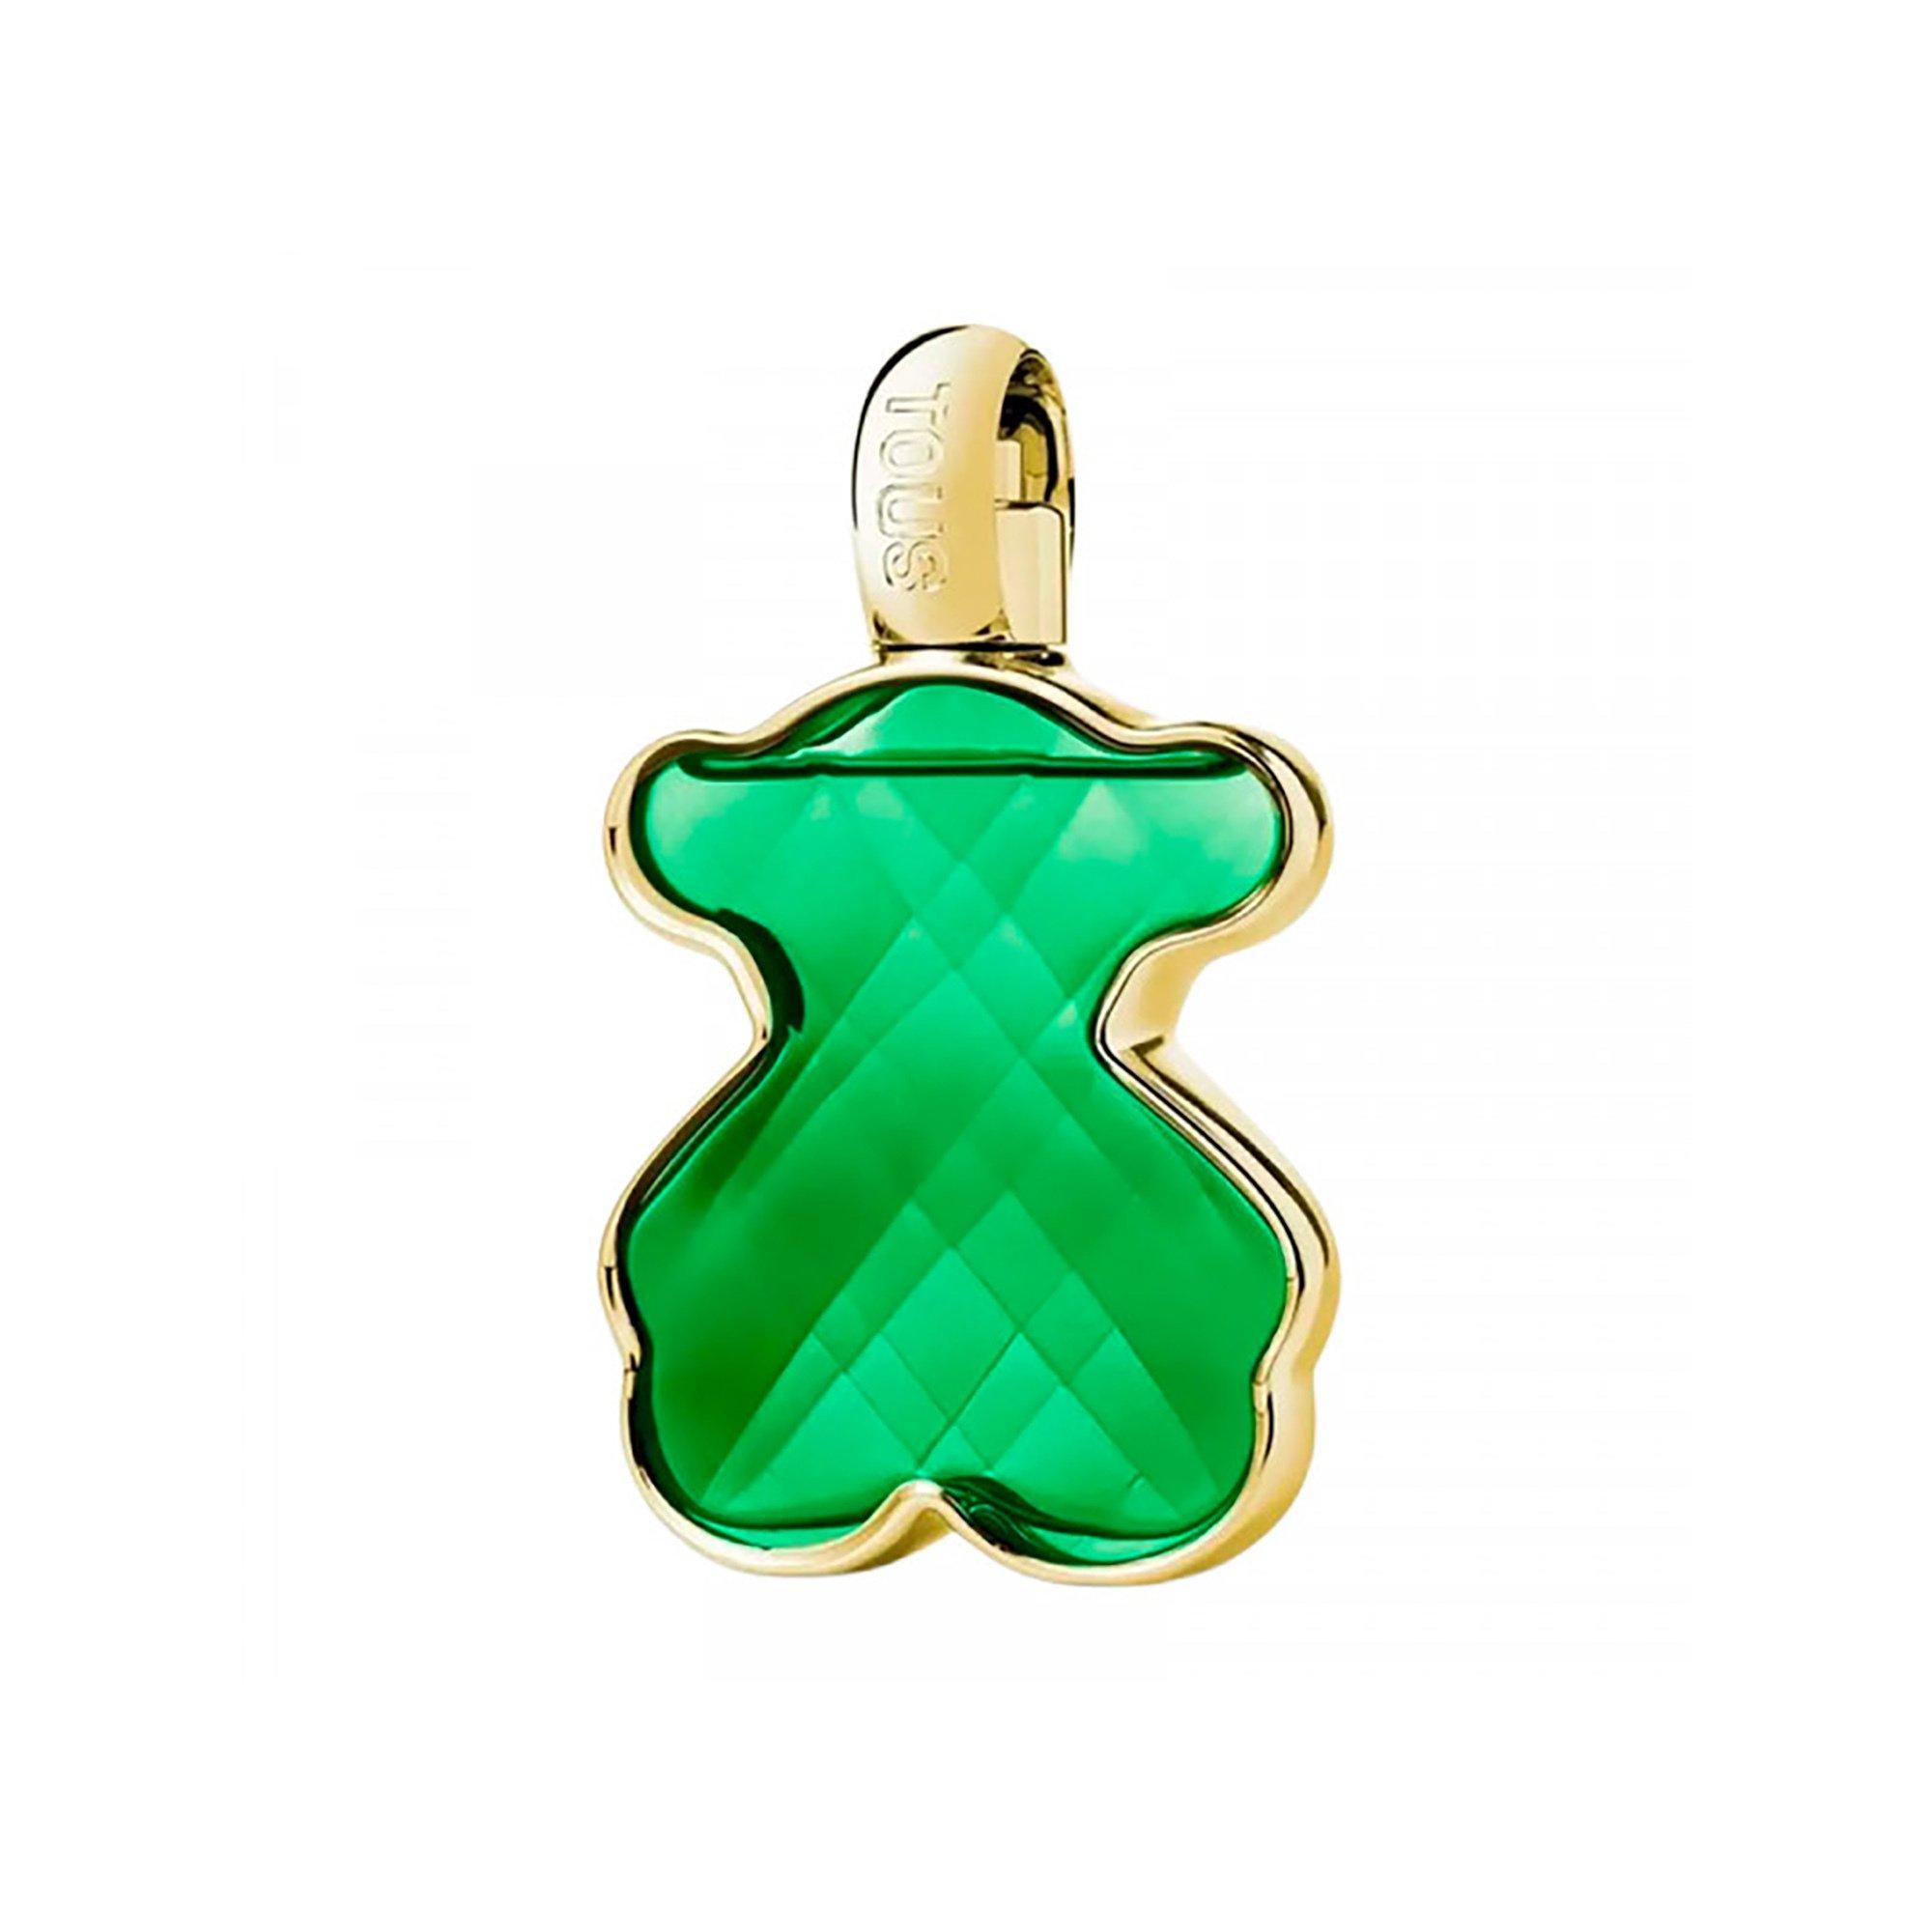 Tous LoveMe LoveMe The Emerald Elixir Parfum 